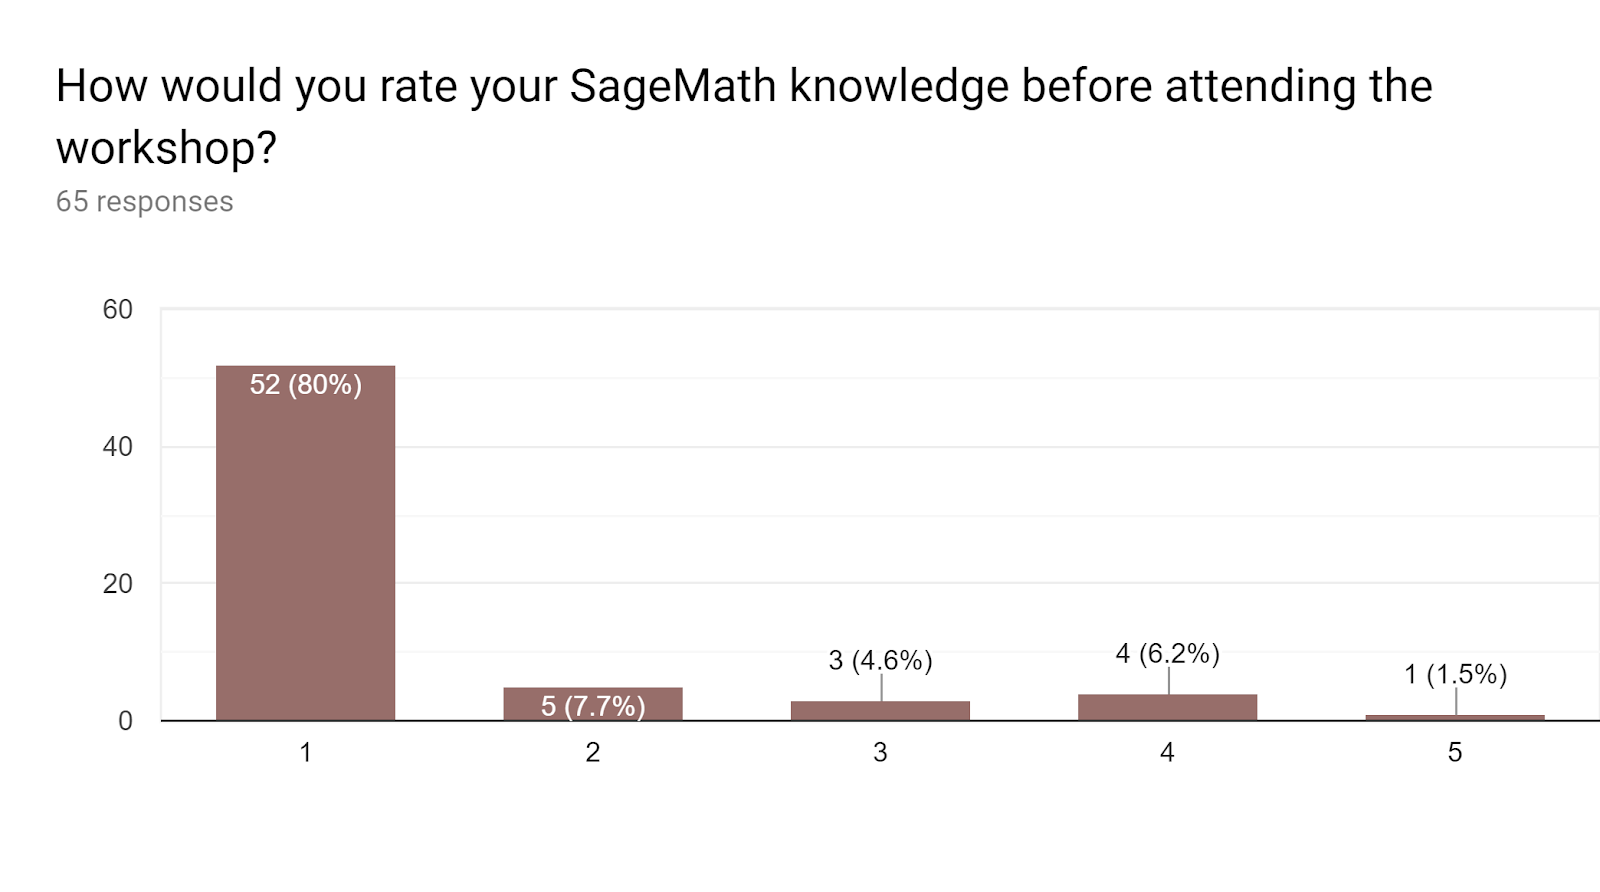 Sage knowledge prior to the workshop: 1: 80%; 2: 7.7%; 3: 4.6%; 4: 6.2%; 5: 1.5%